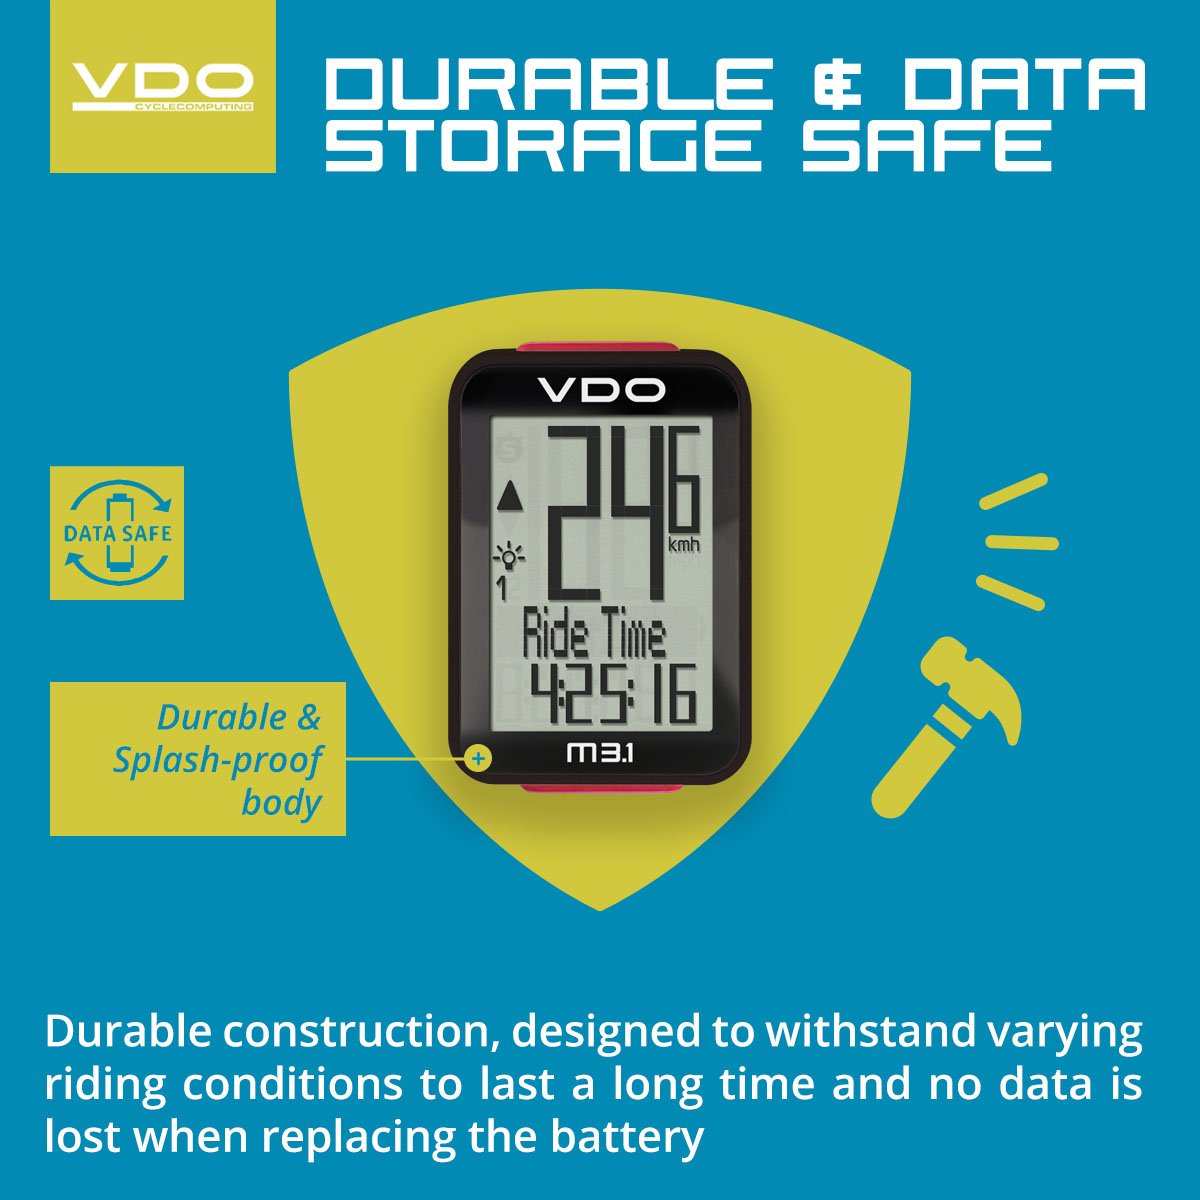 VDO Bicycle Computer M3.1 (wireless) bundle w/ cadence